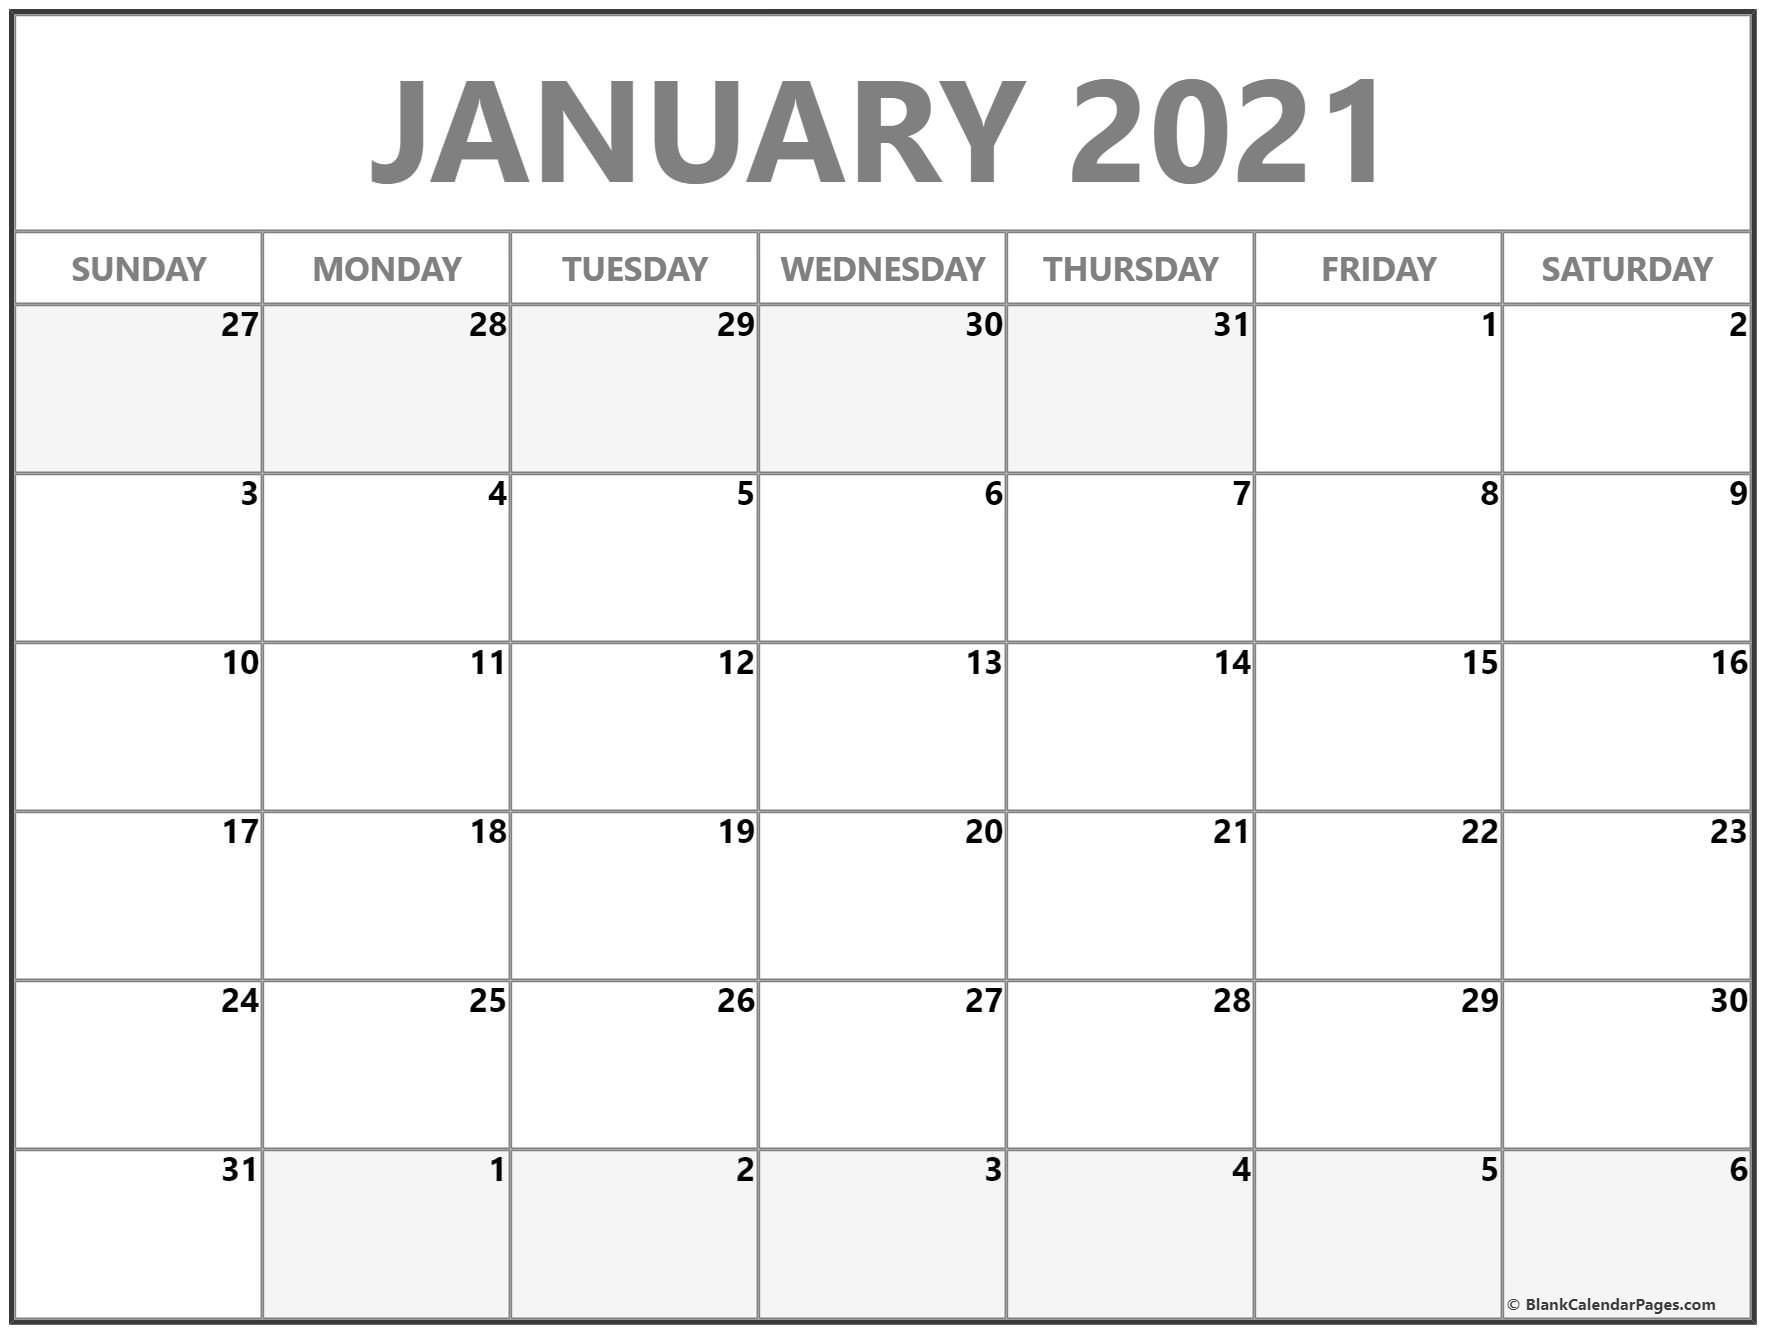 January 2021 Weekly Calendar | Printable Calendar Design